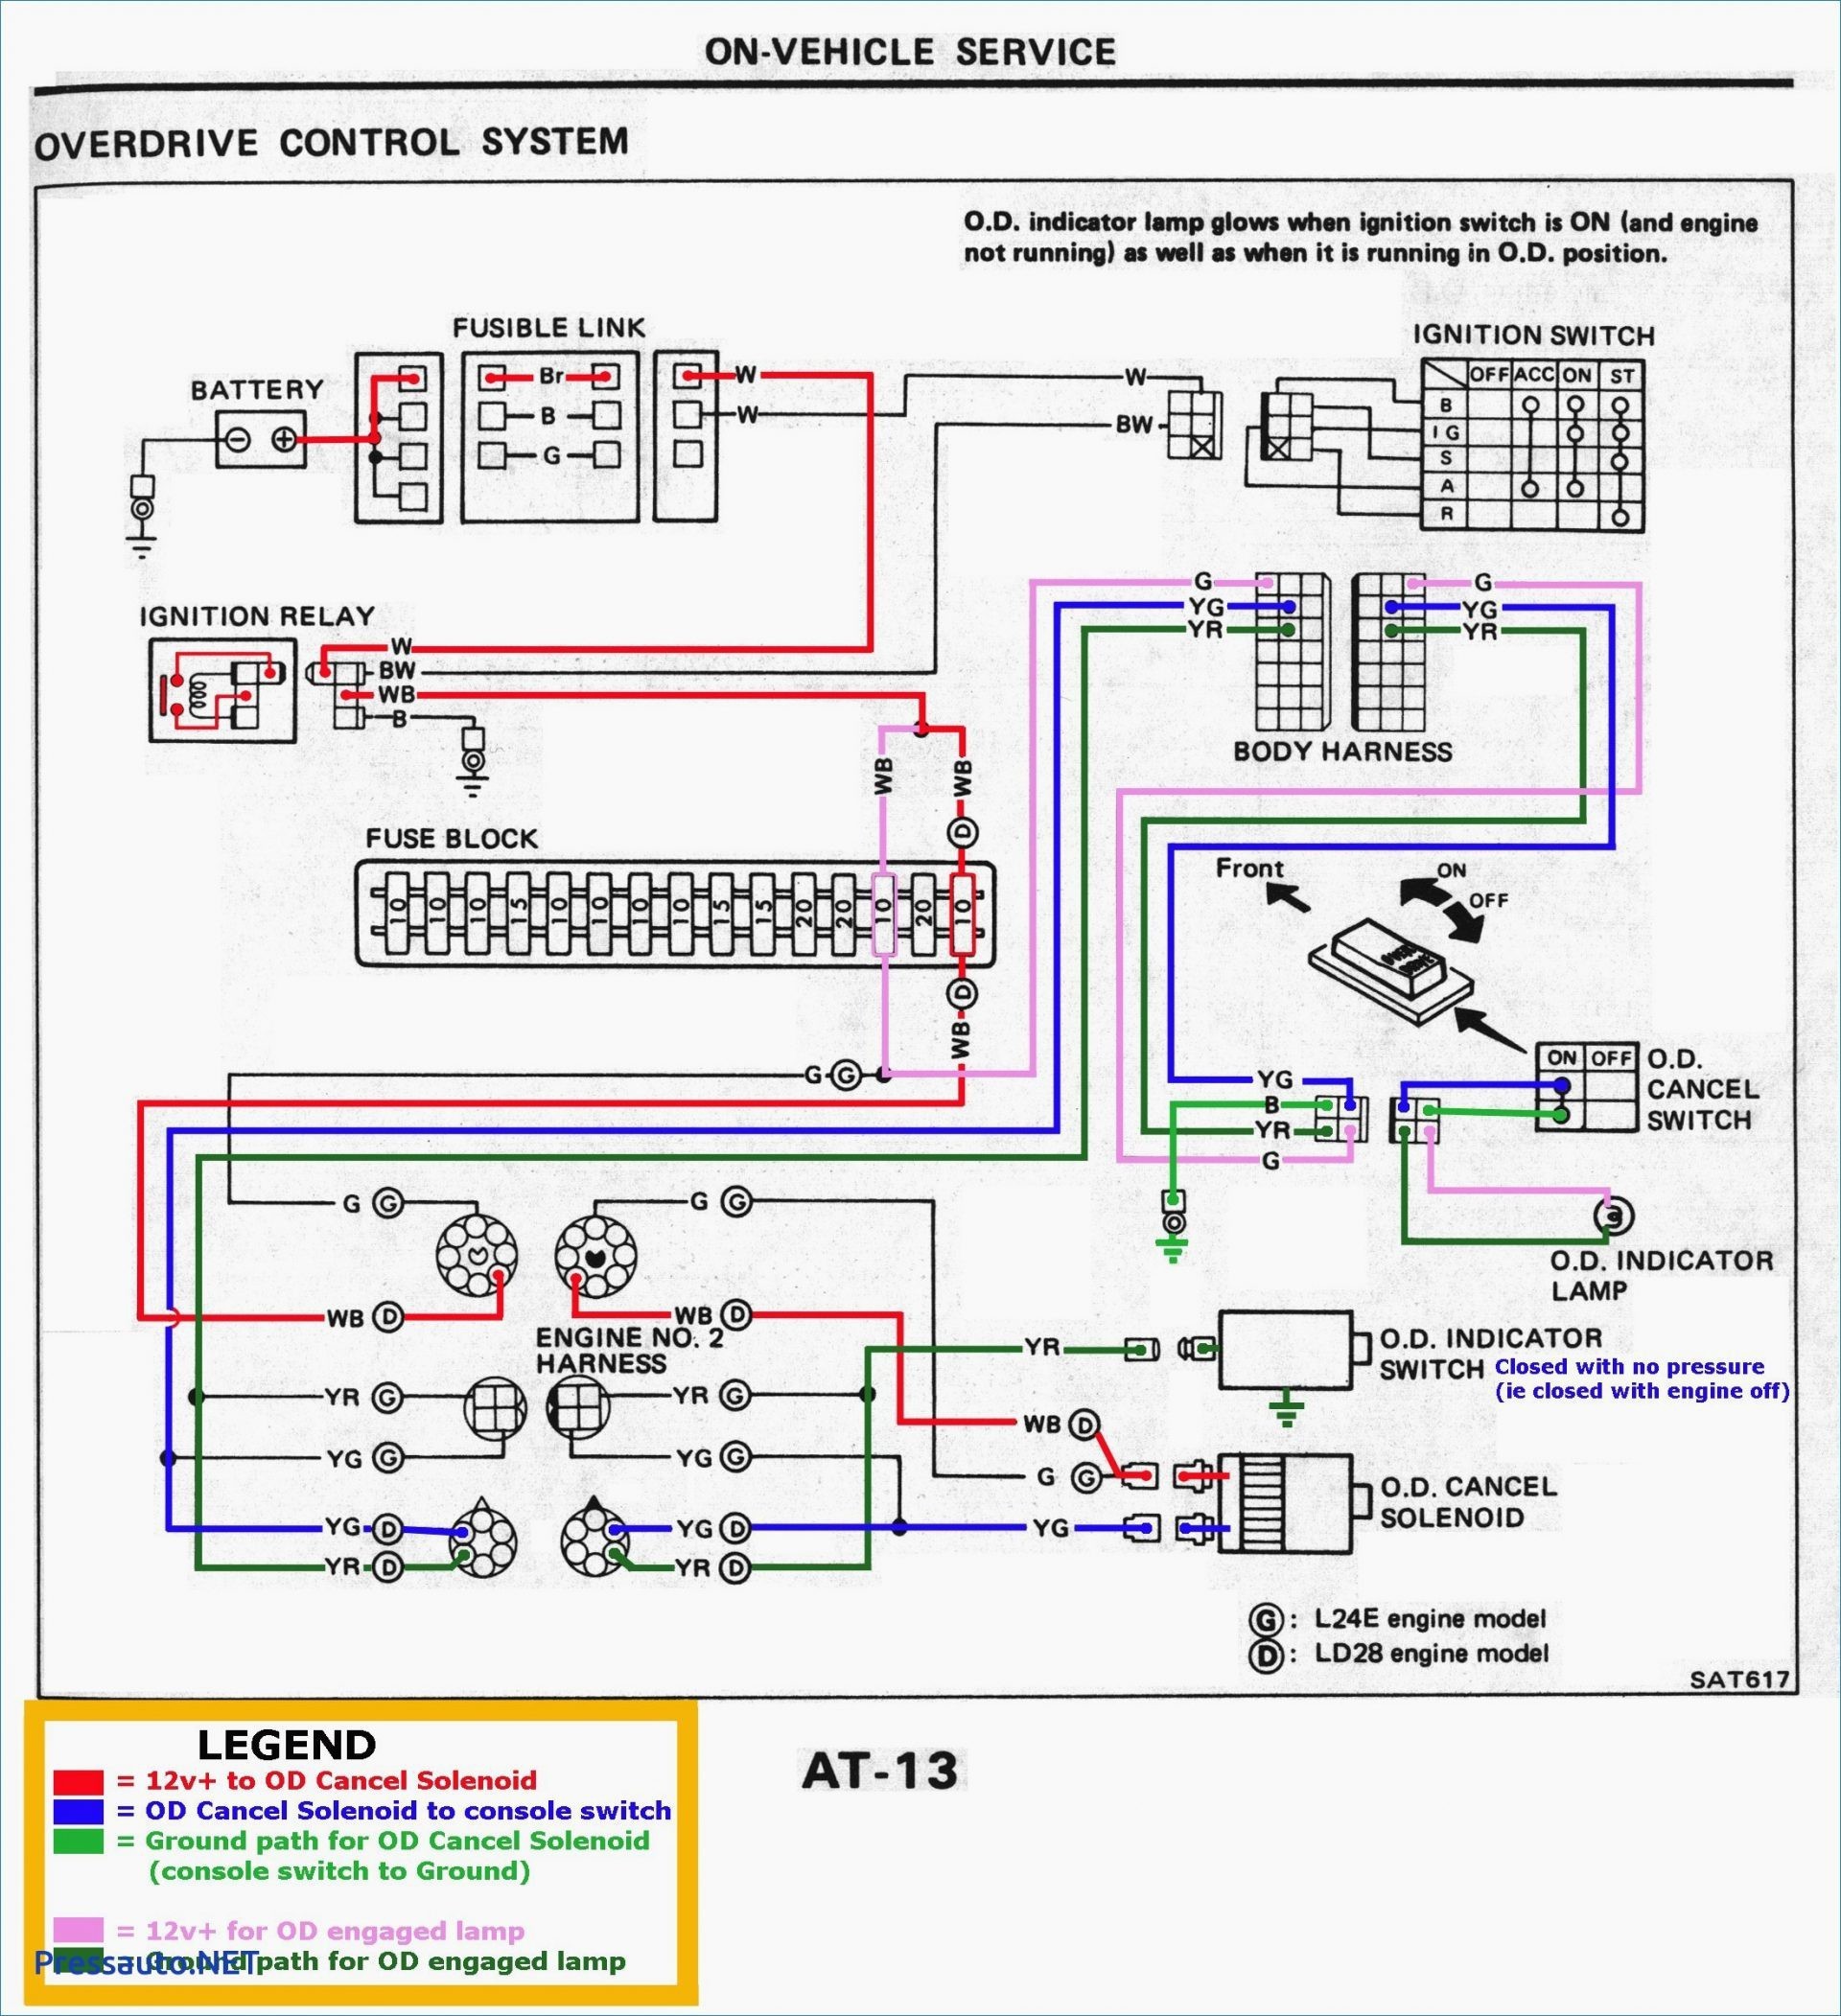 2004 Gmc Yukon Parts Diagram 2004 Gmc Trailer Wiring Diagram Wiring Diagrams Schematics • Of 2004 Gmc Yukon Parts Diagram